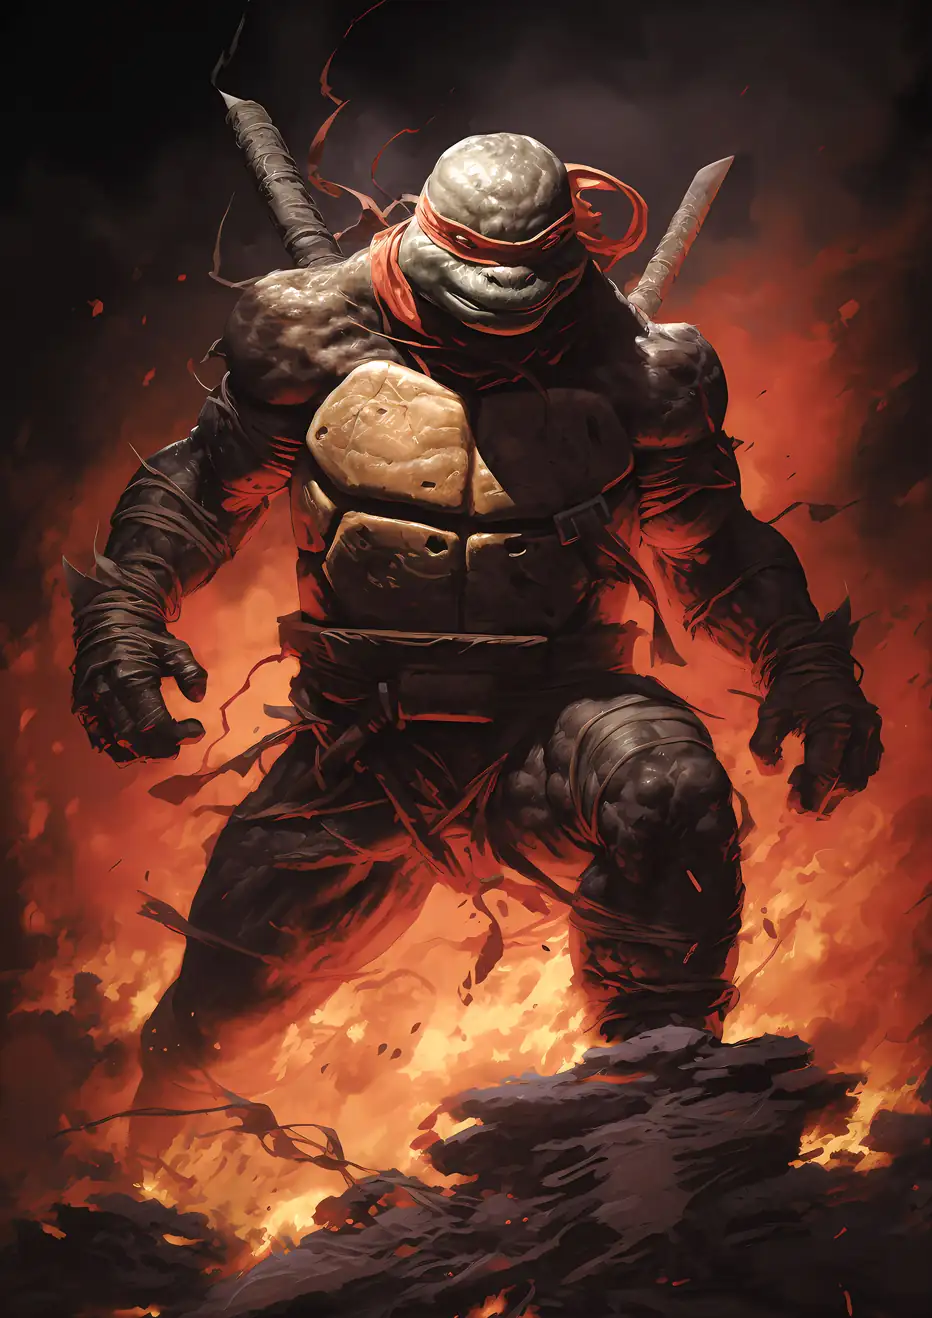 "Netherworld Ninja" depicts a battle-hardened turtle ninja standing firm amidst flames.